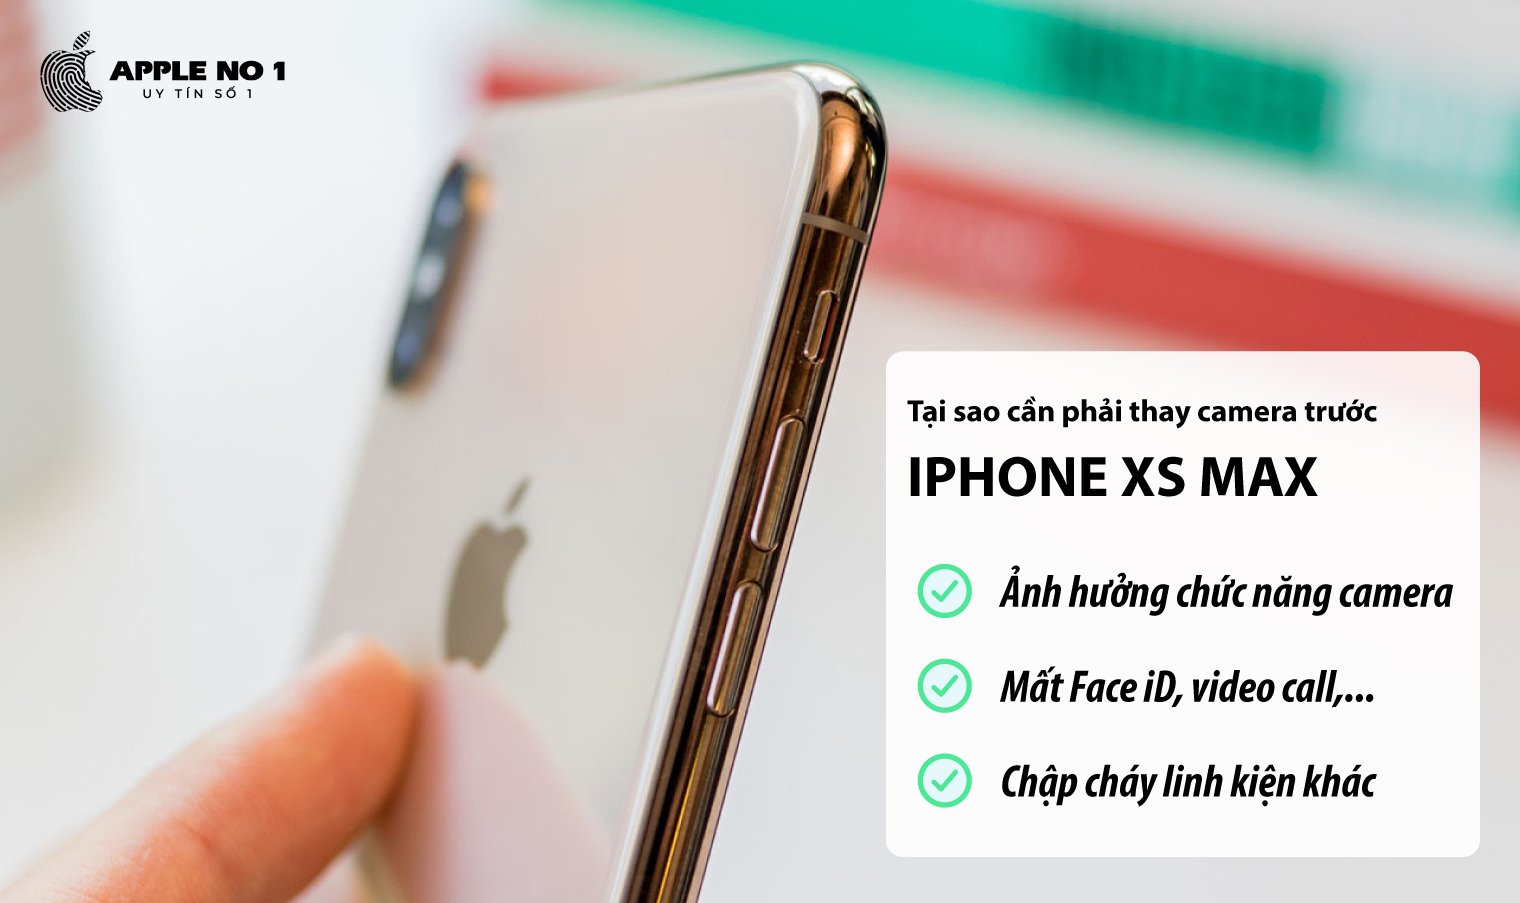 tai sao can phai thay camera truoc iphone xs max?